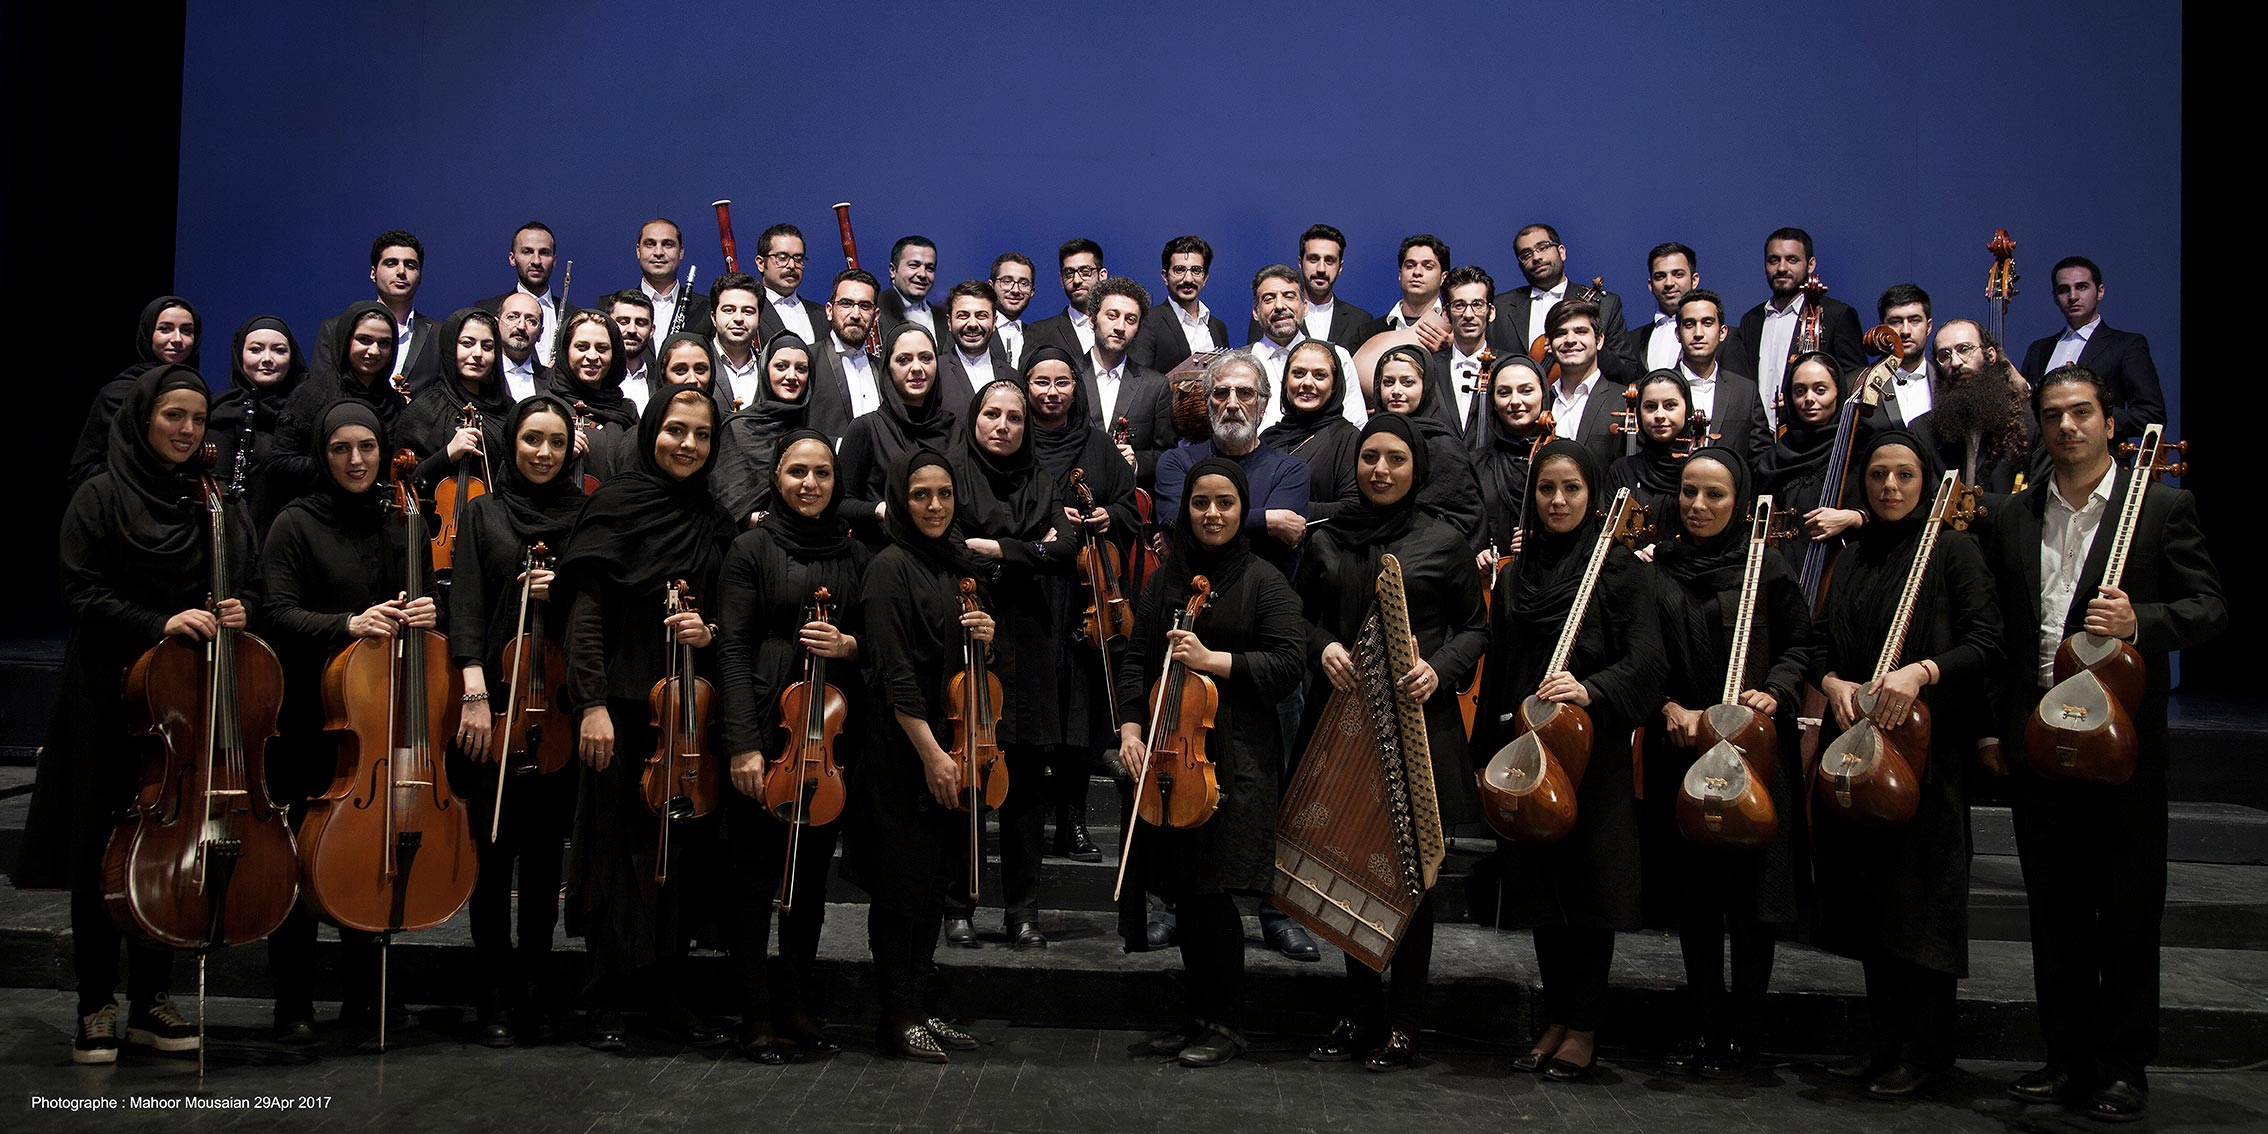 Iran’s National Orchestra Concert, 5th May 2017